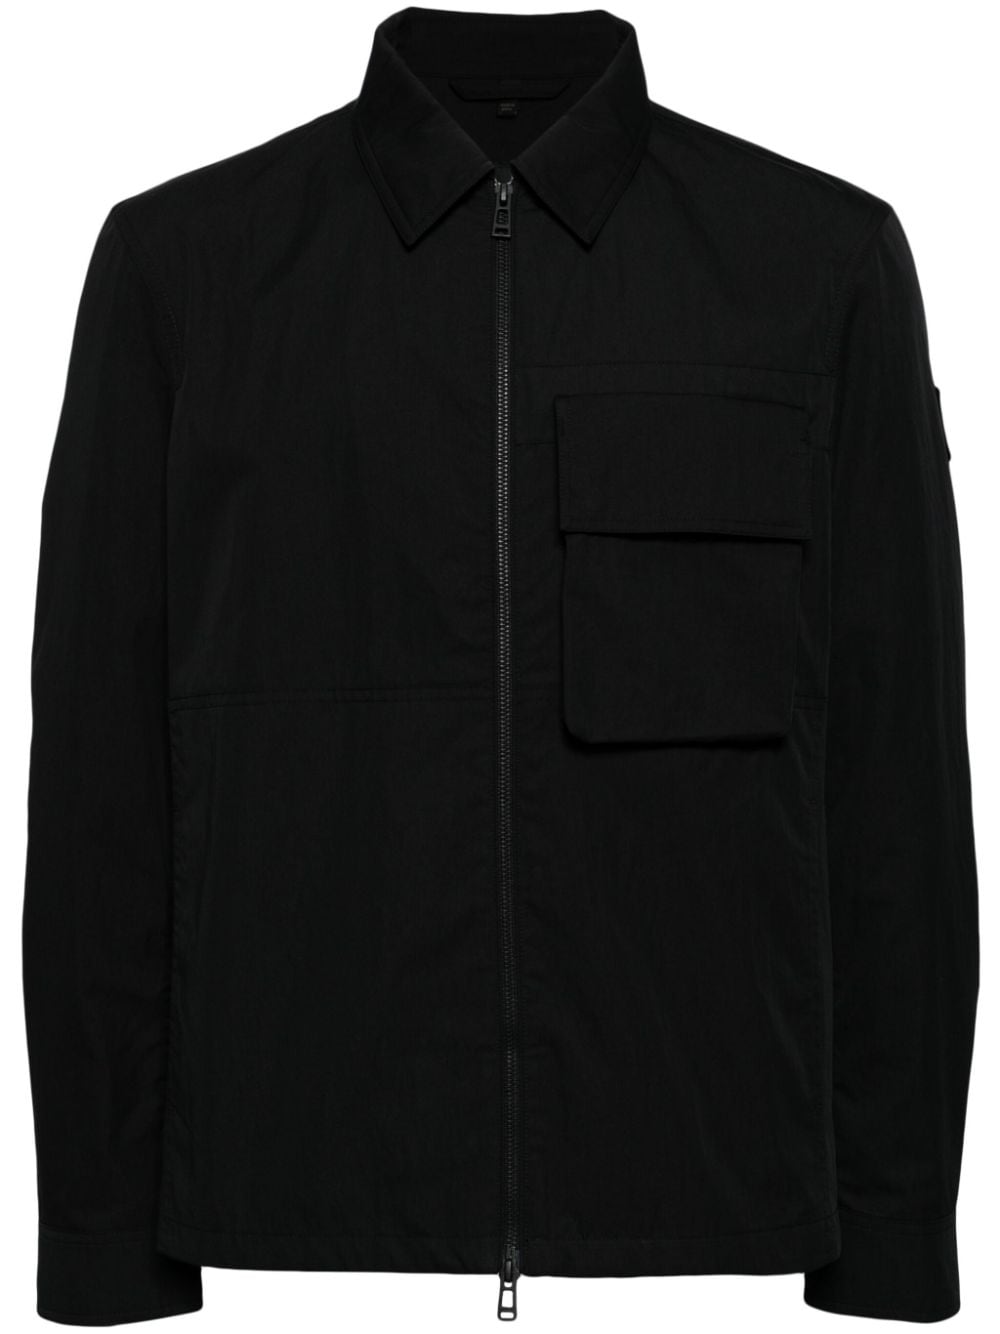 Belstaff Runner shirt jacket - Black von Belstaff